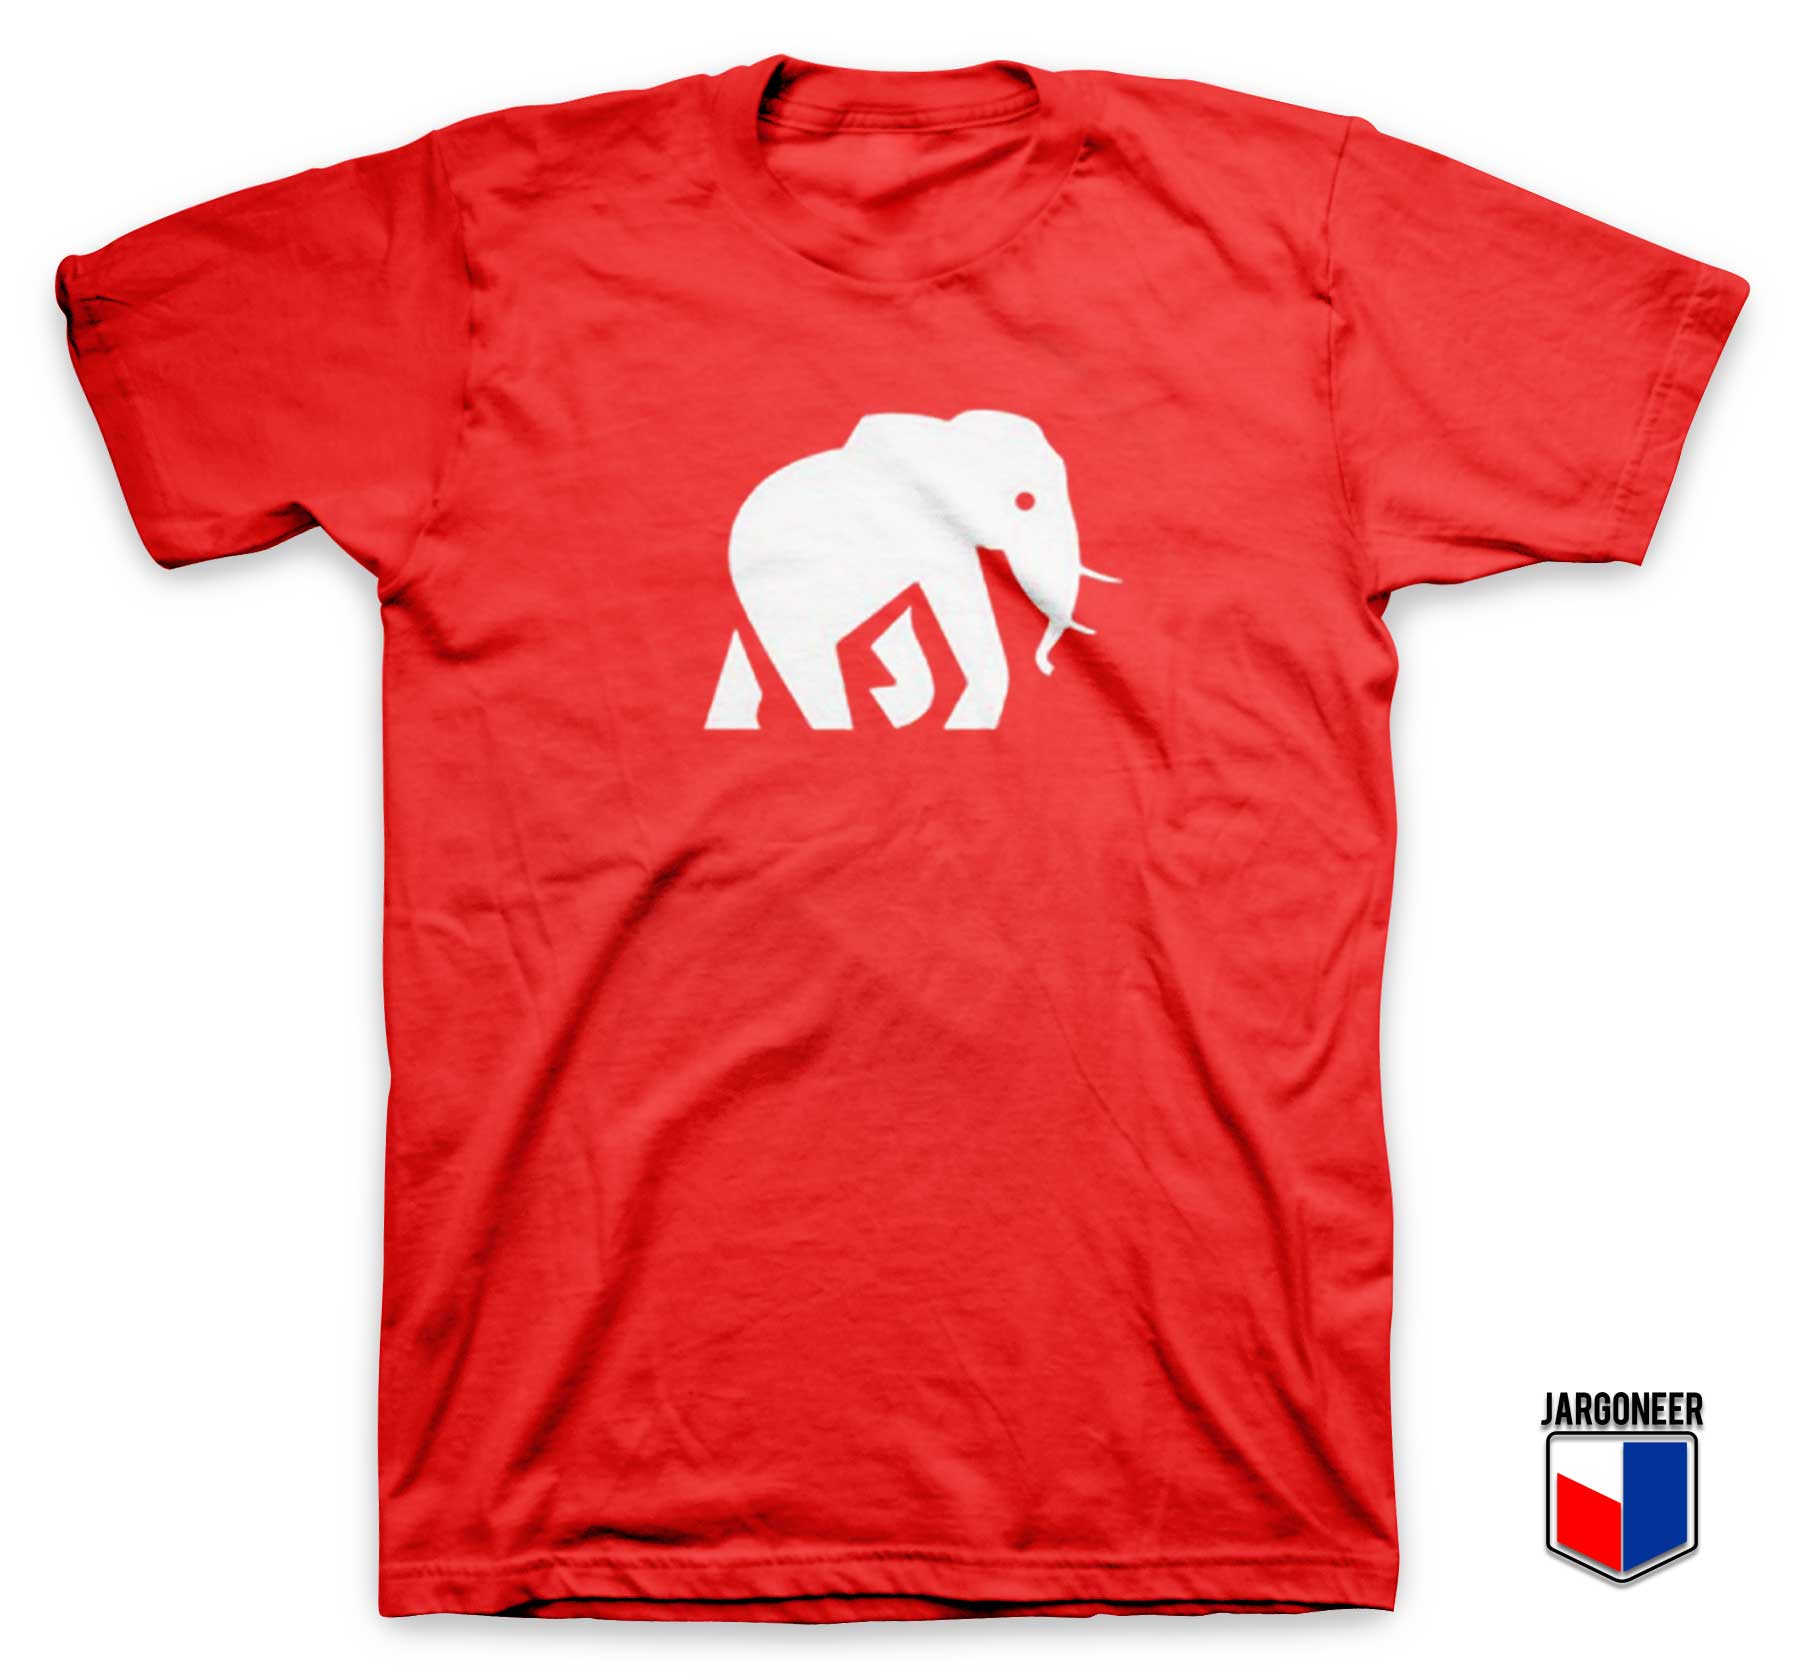 Banana Republic Elephant - Shop Unique Graphic Cool Shirt Designs